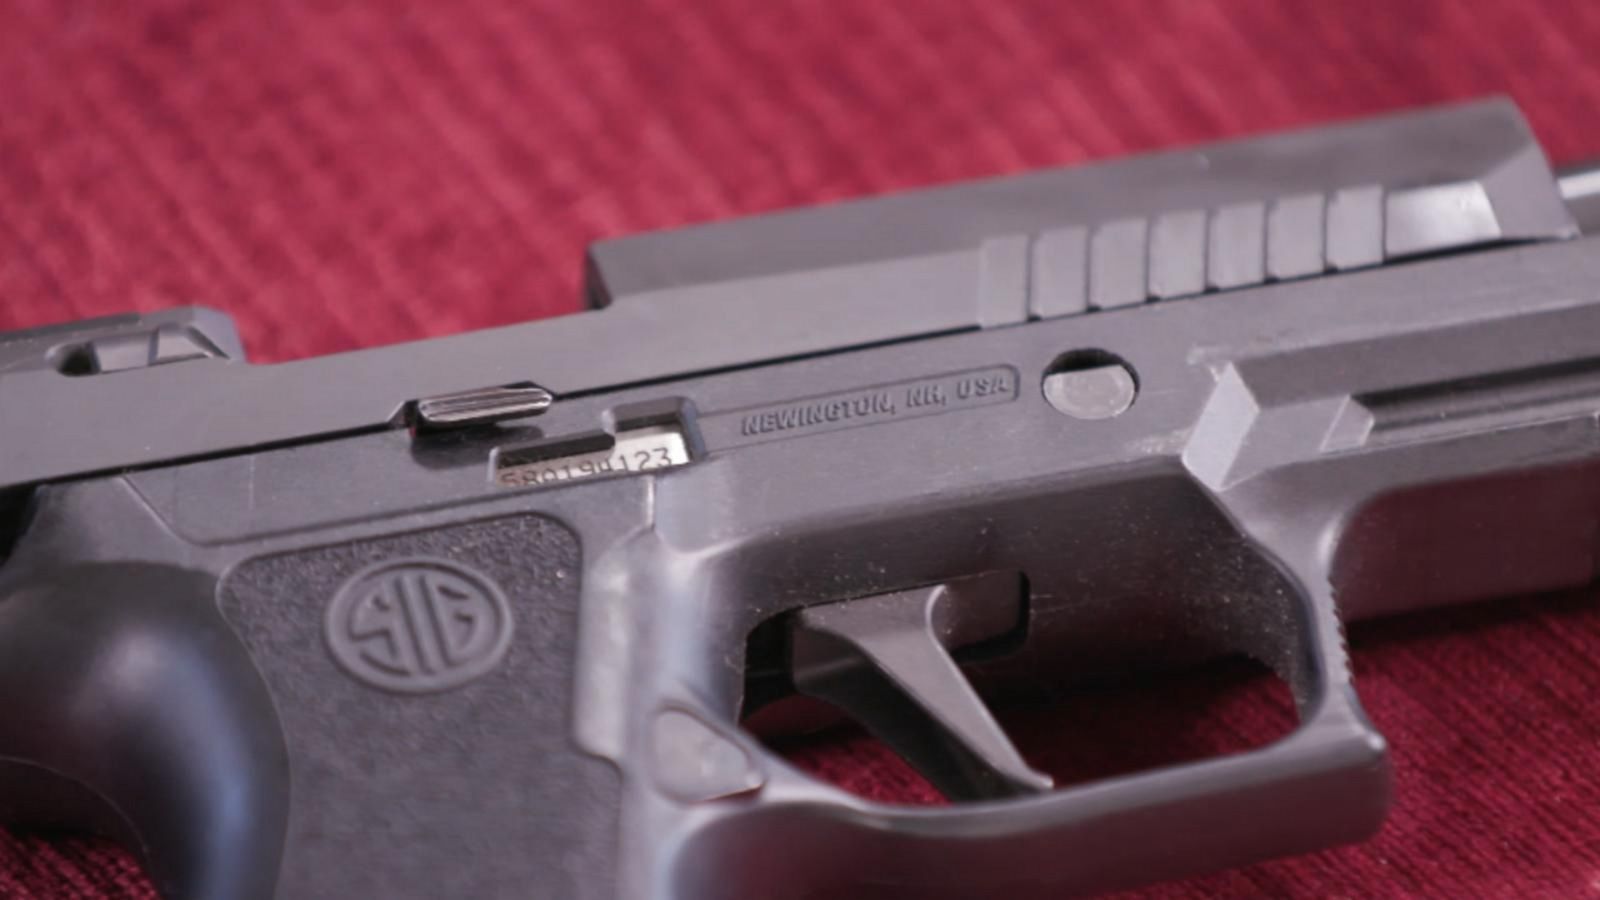 New lawsuit alleges P320 handgun has design, manufacturing flaws - Good ...